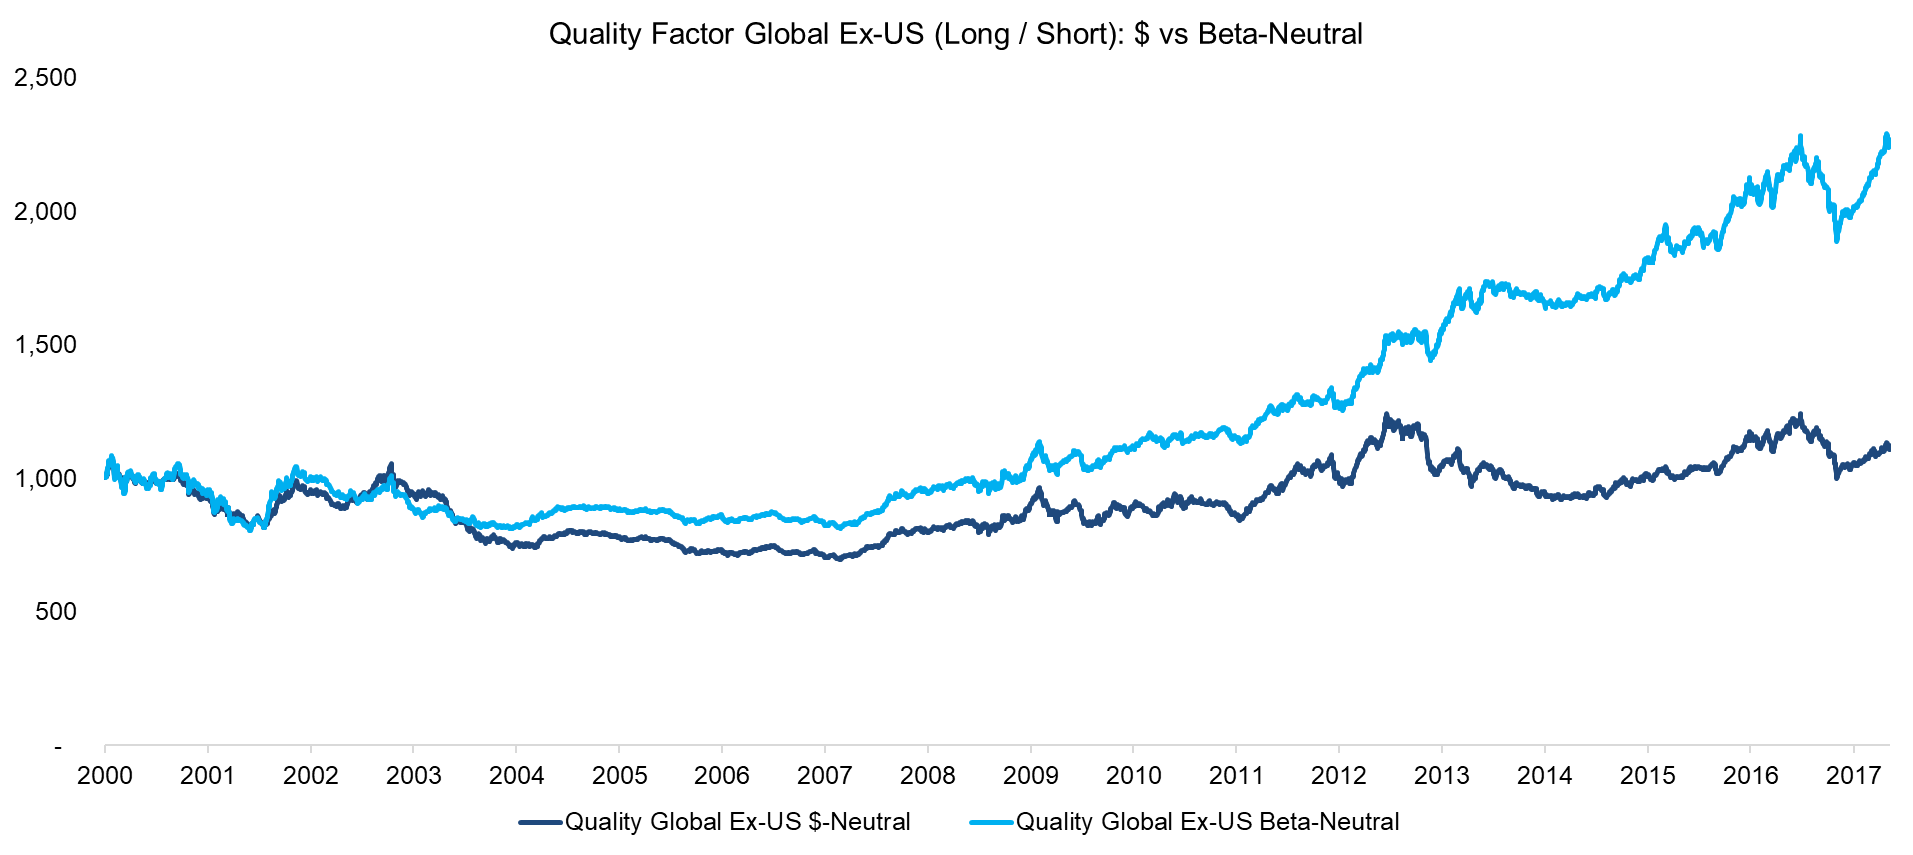 Quality Factor Global Ex-US (Long Short) $ vs Beta-Neutral